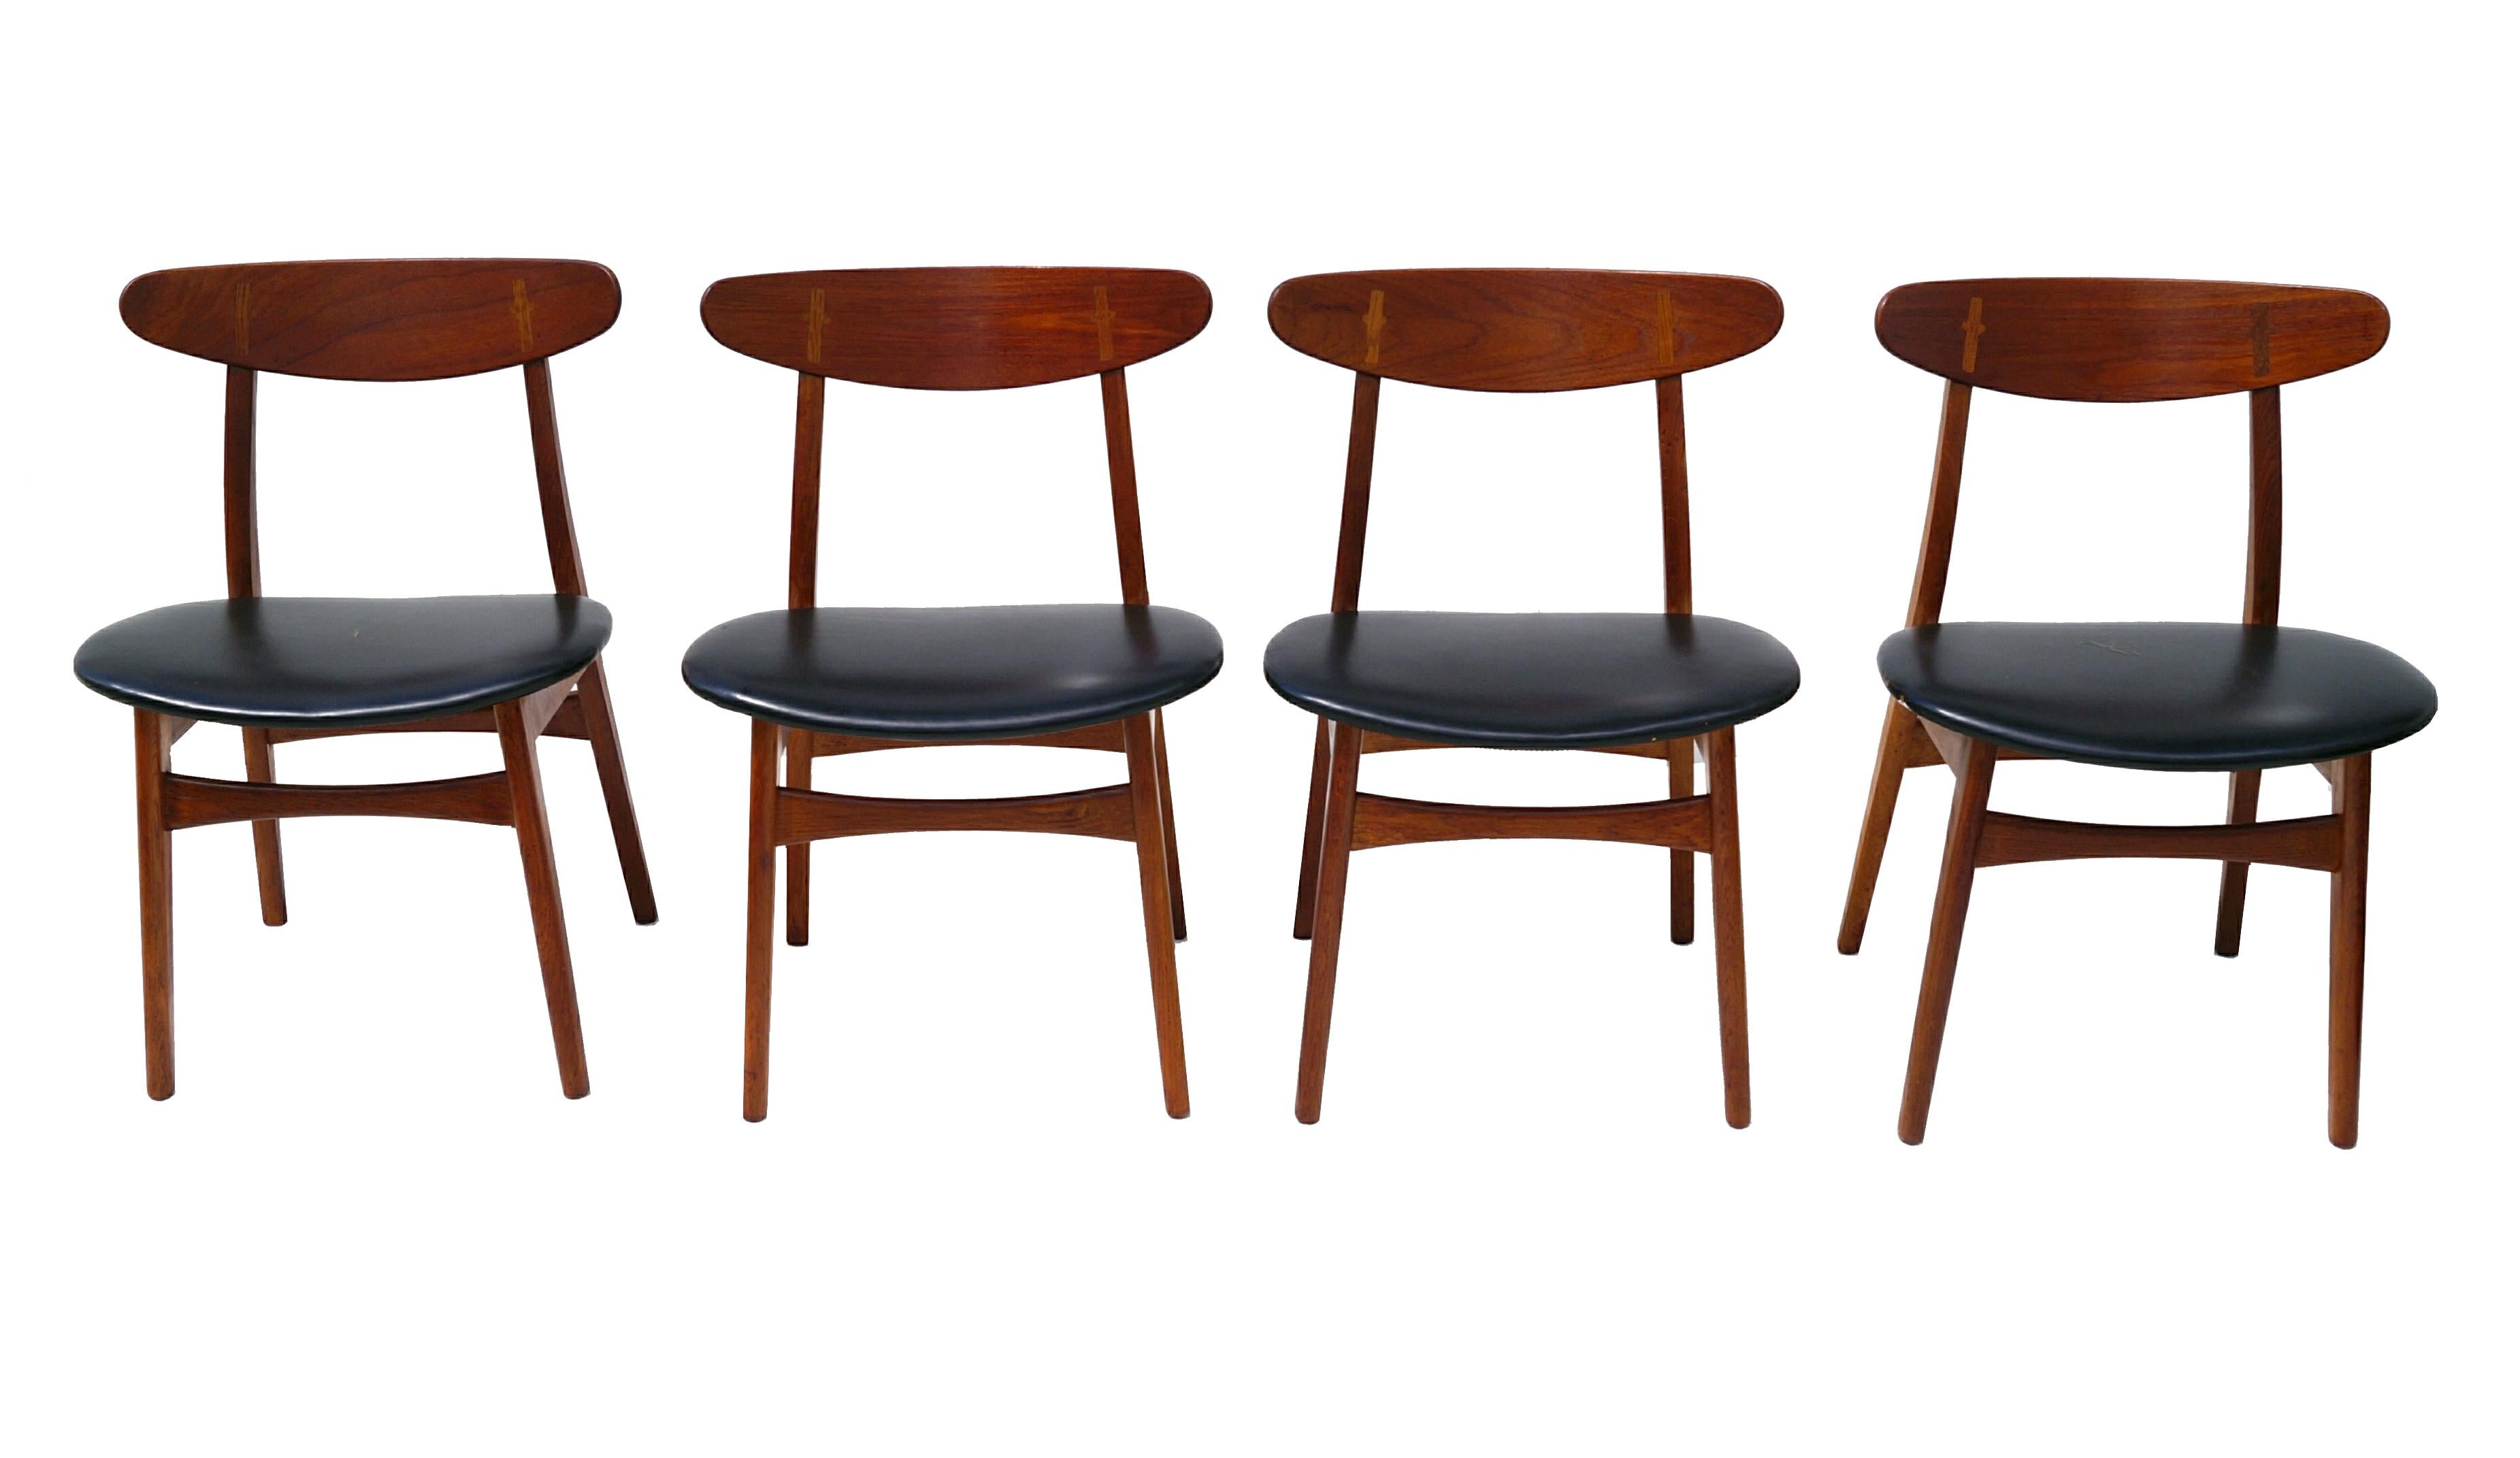 Set of 6 Hans J. Wegner dining chairs model CH 30 For Carl Hansen & Son. Sold by Jensen Inc.